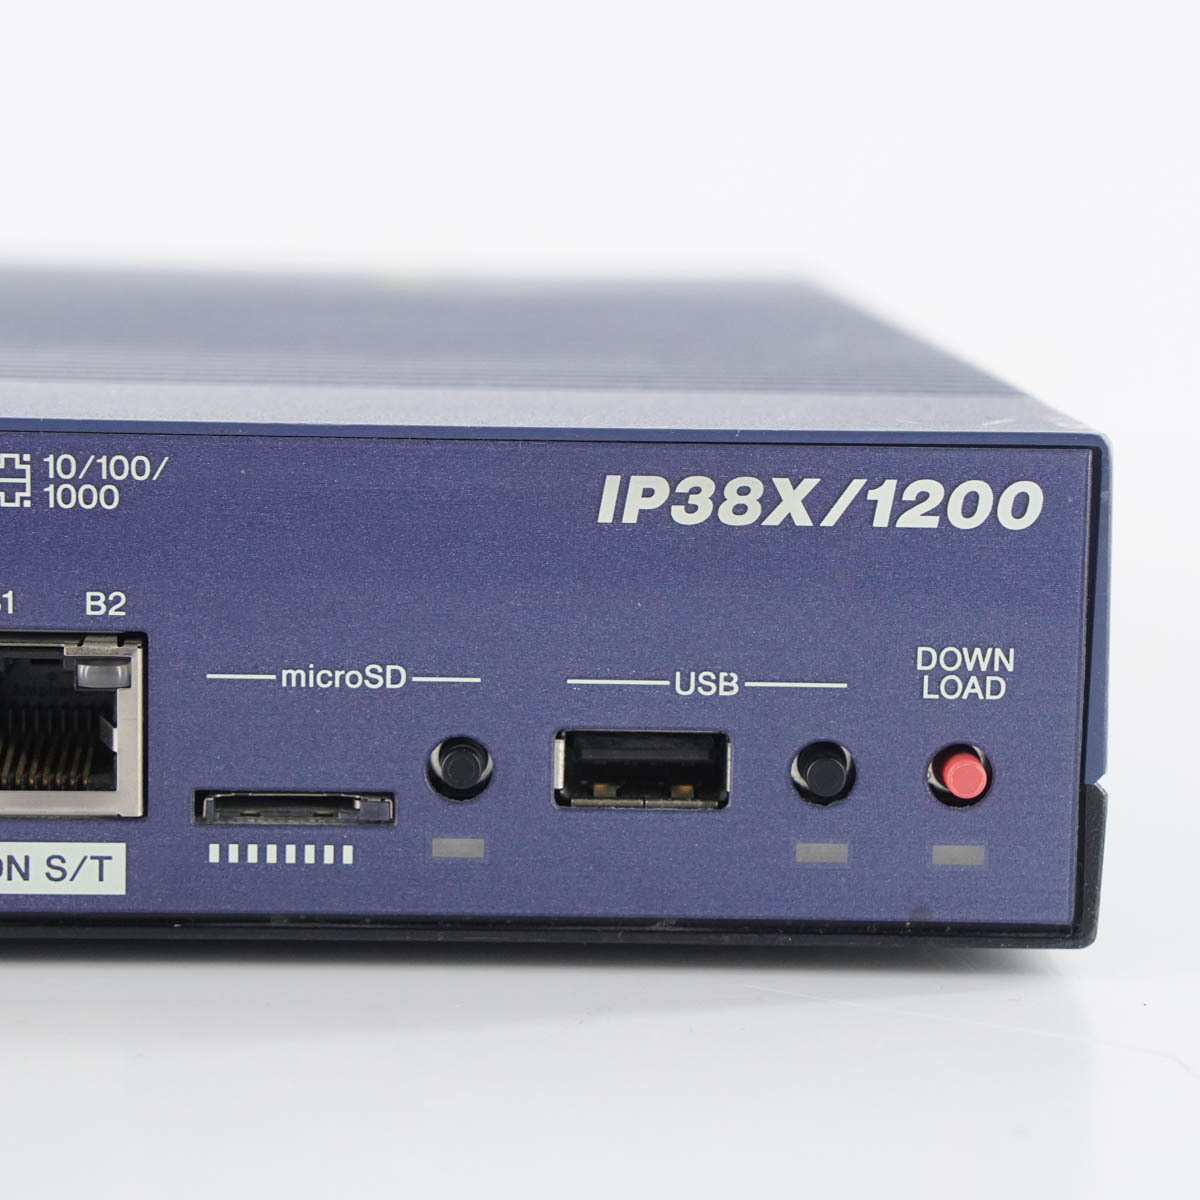 [PG] 8日保証 20台入荷 初期化済 IP38X/1200 NEC 日本電気 ギガアクセスVPNルーター[05679-0002]_画像7